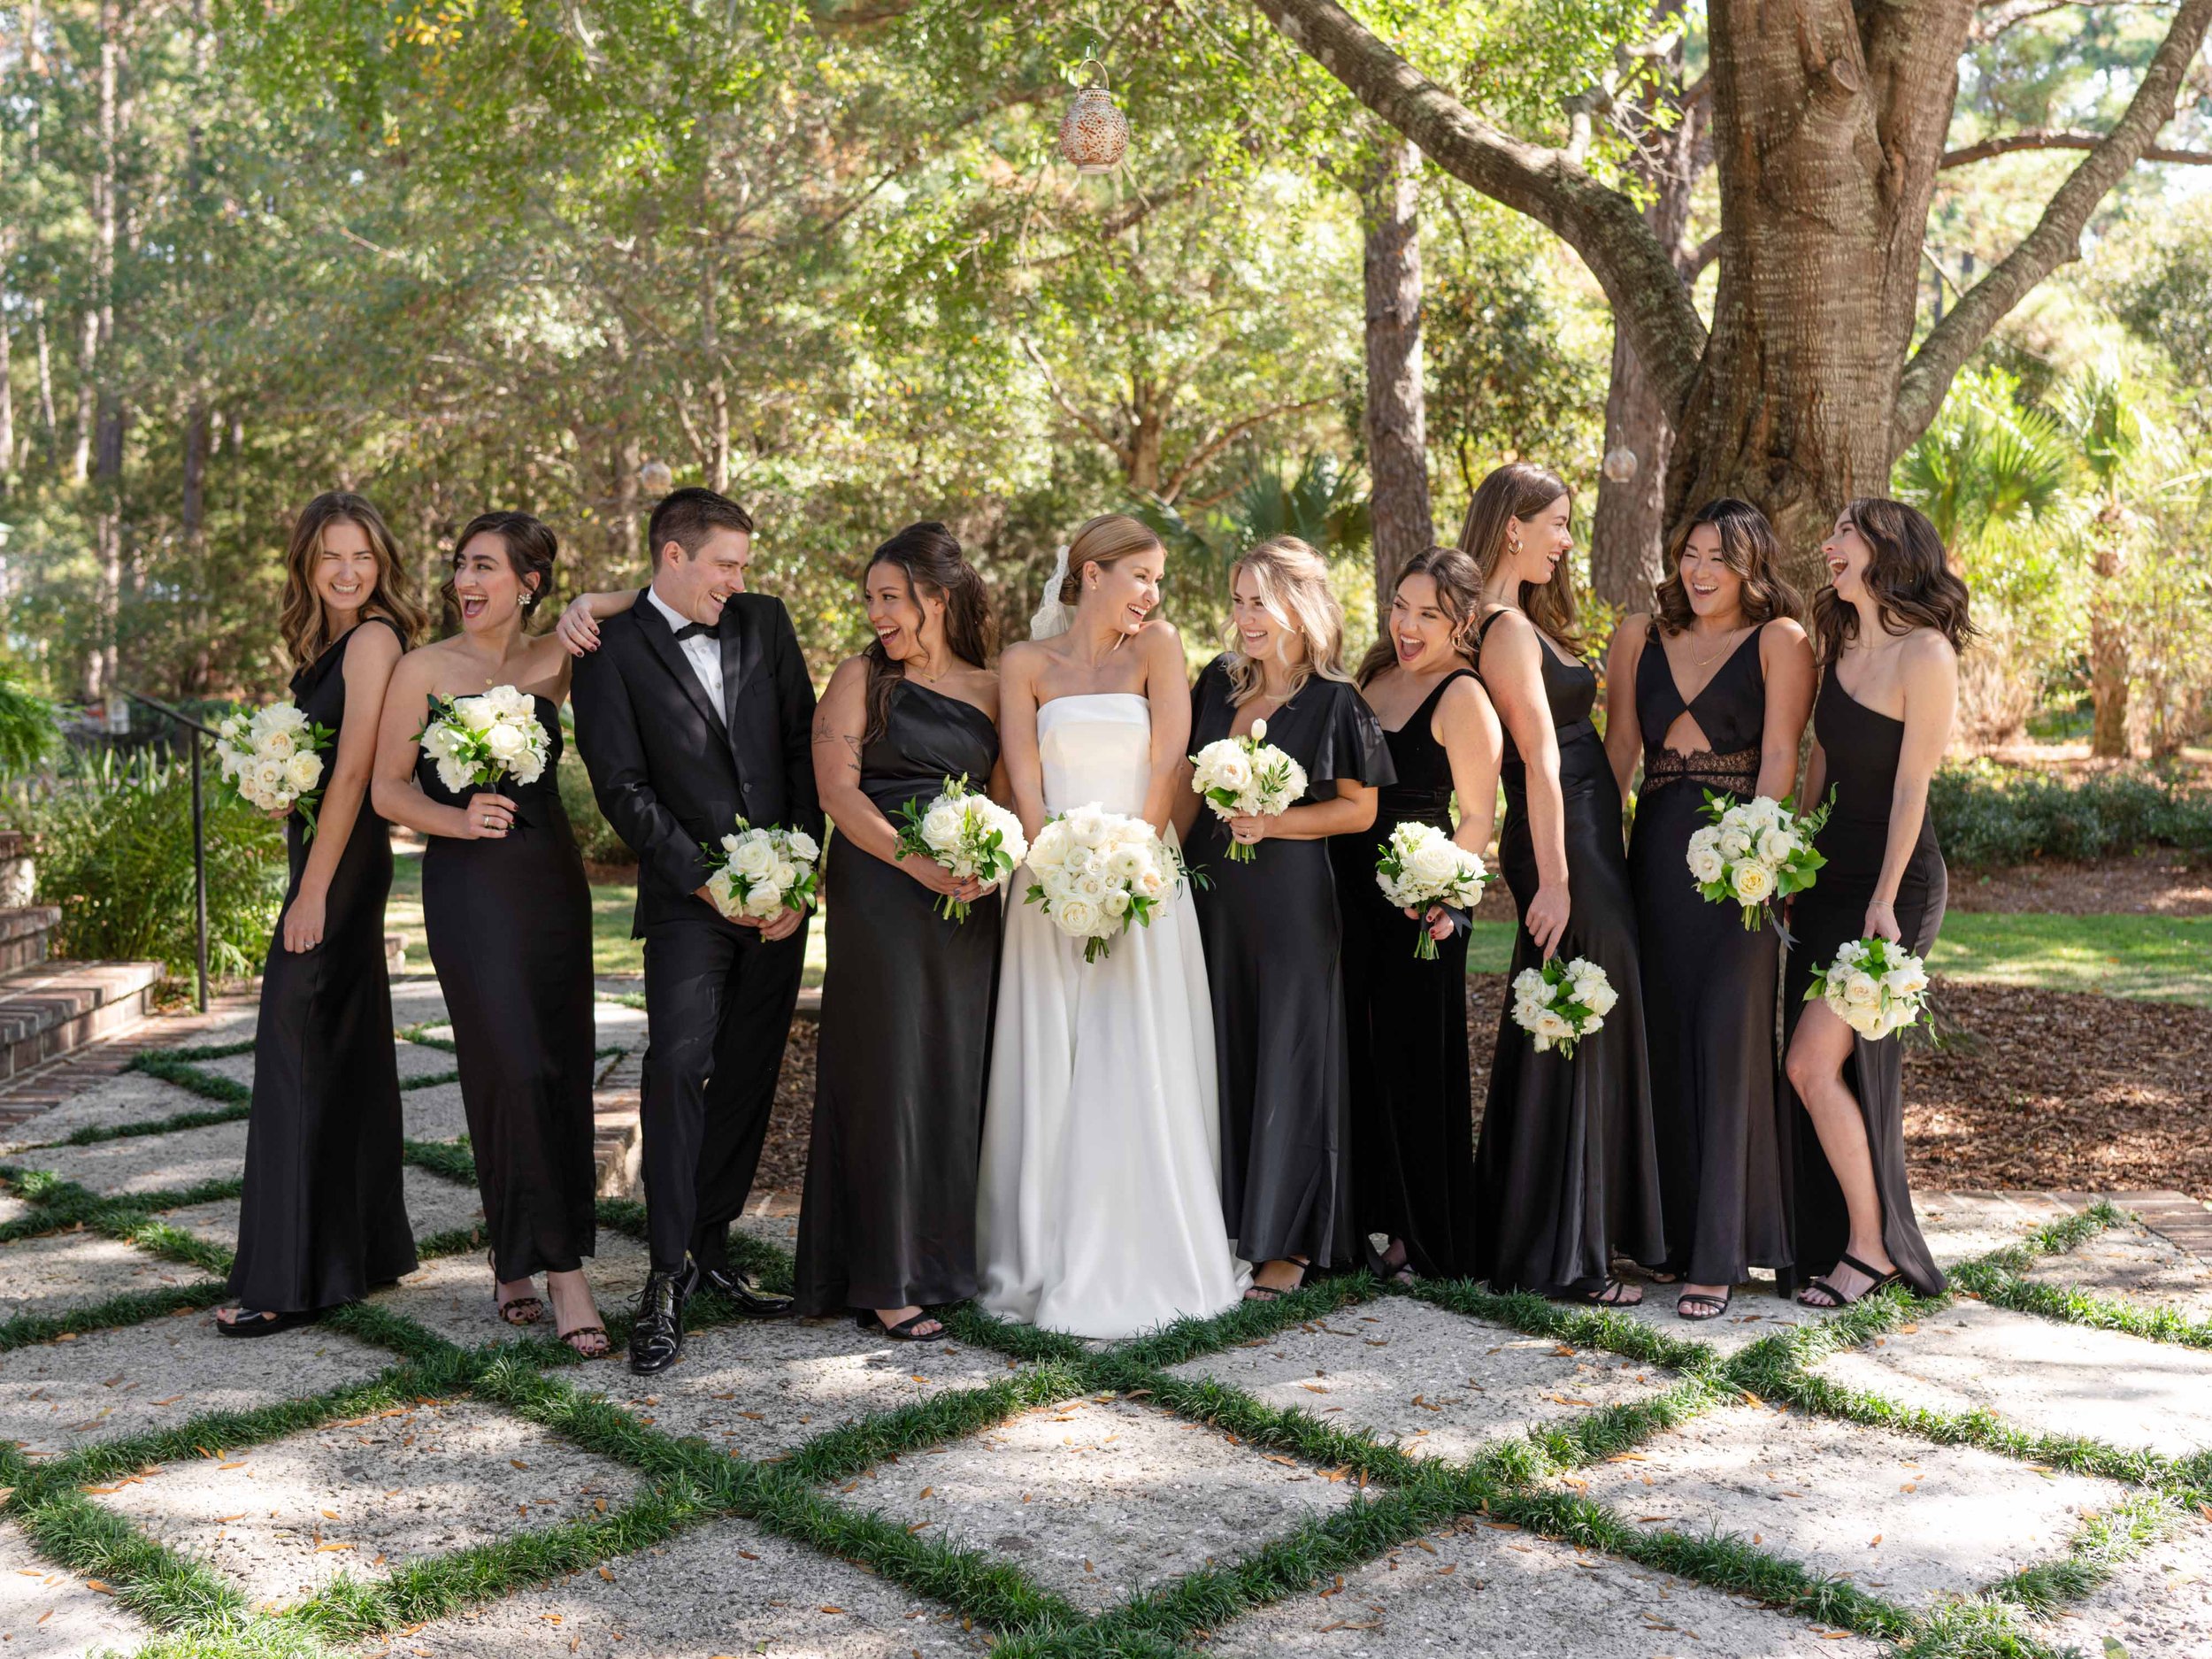 Elias-Felton-Spring-Island-South-Carolina-Wedding-Photographer-Holly-Felts-Photography-621.jpg